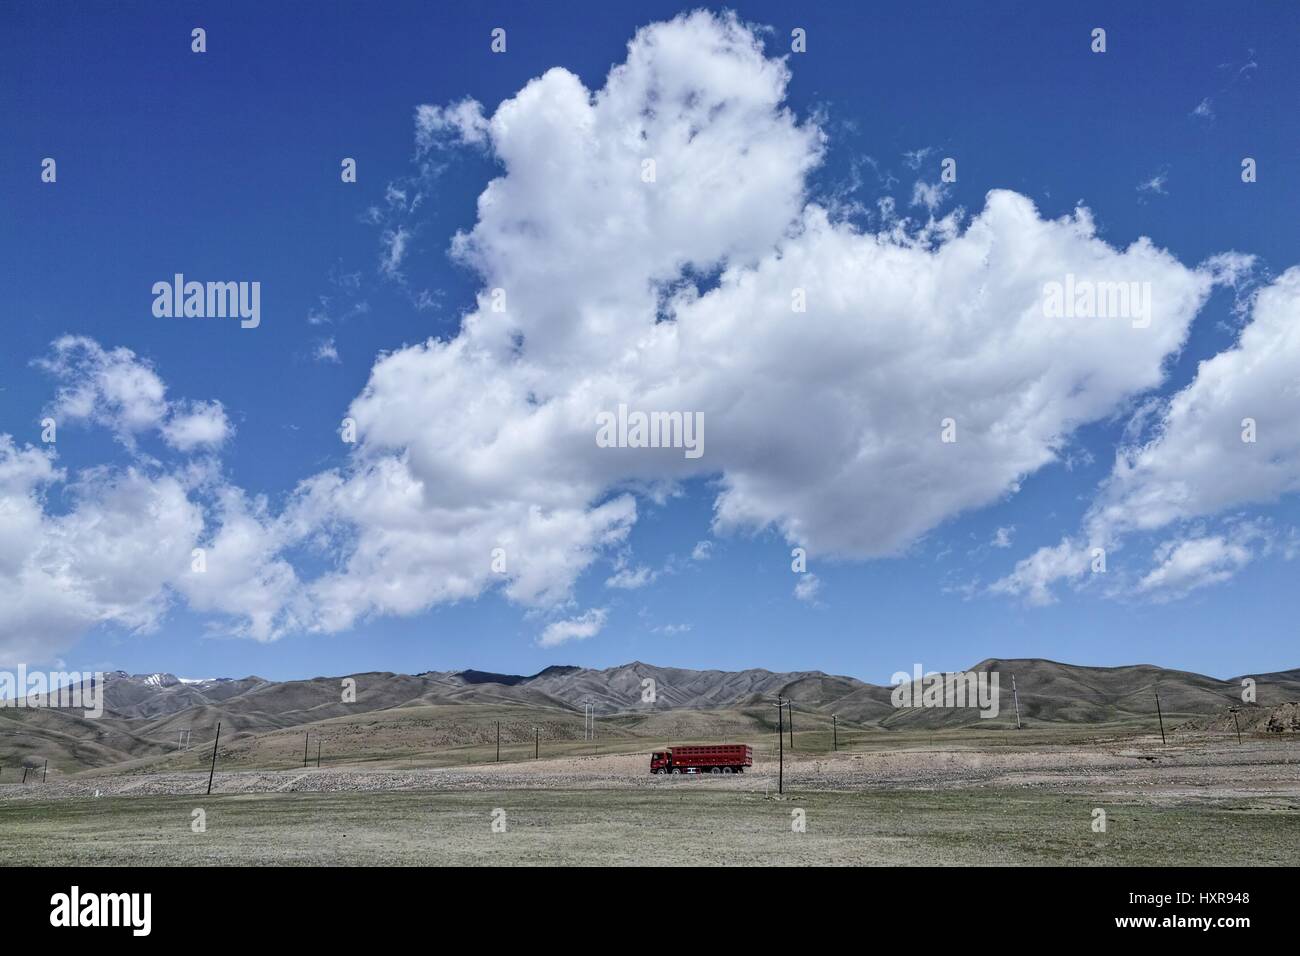 The galloping truck on the road in Bayinbulak grassland, Xinjiang of China Stock Photo